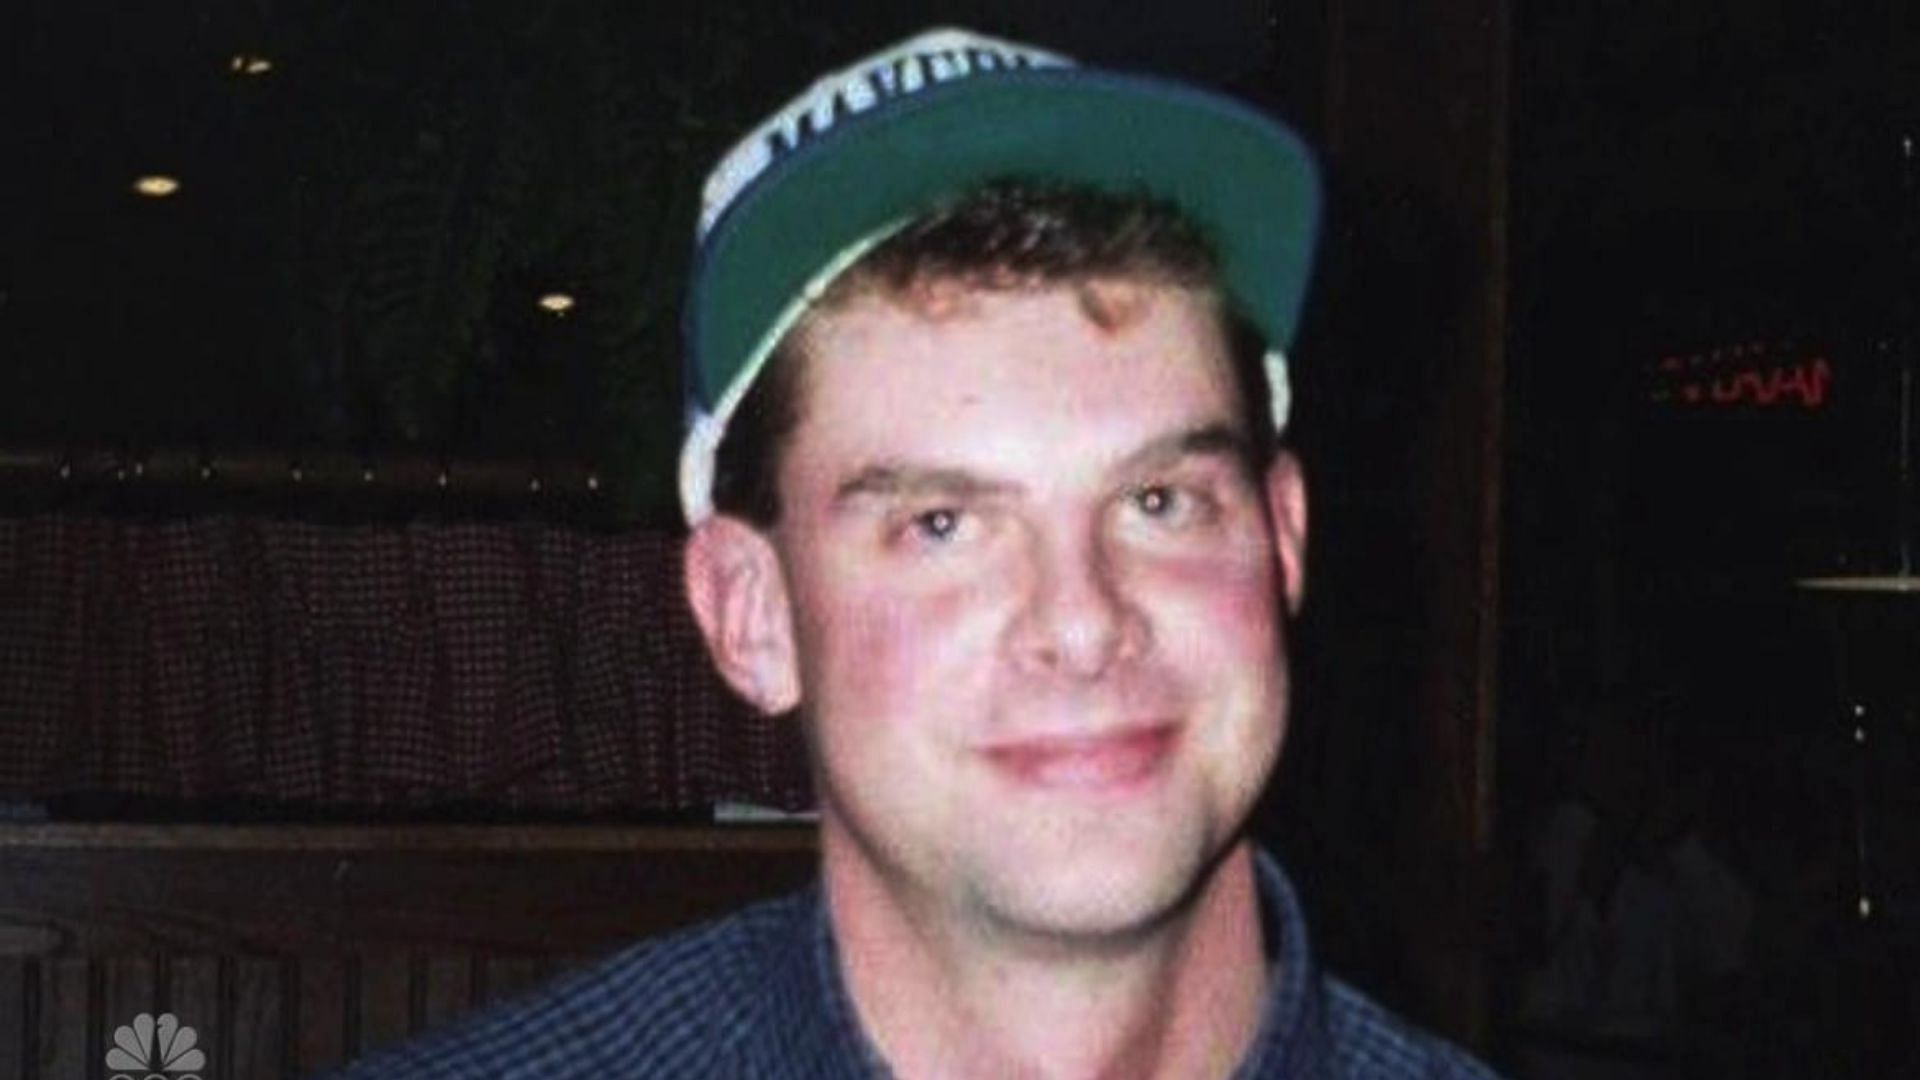 Thomas Jaraczeski was the prime suspect in the murder of Bryan Rein (Image via NBC News)